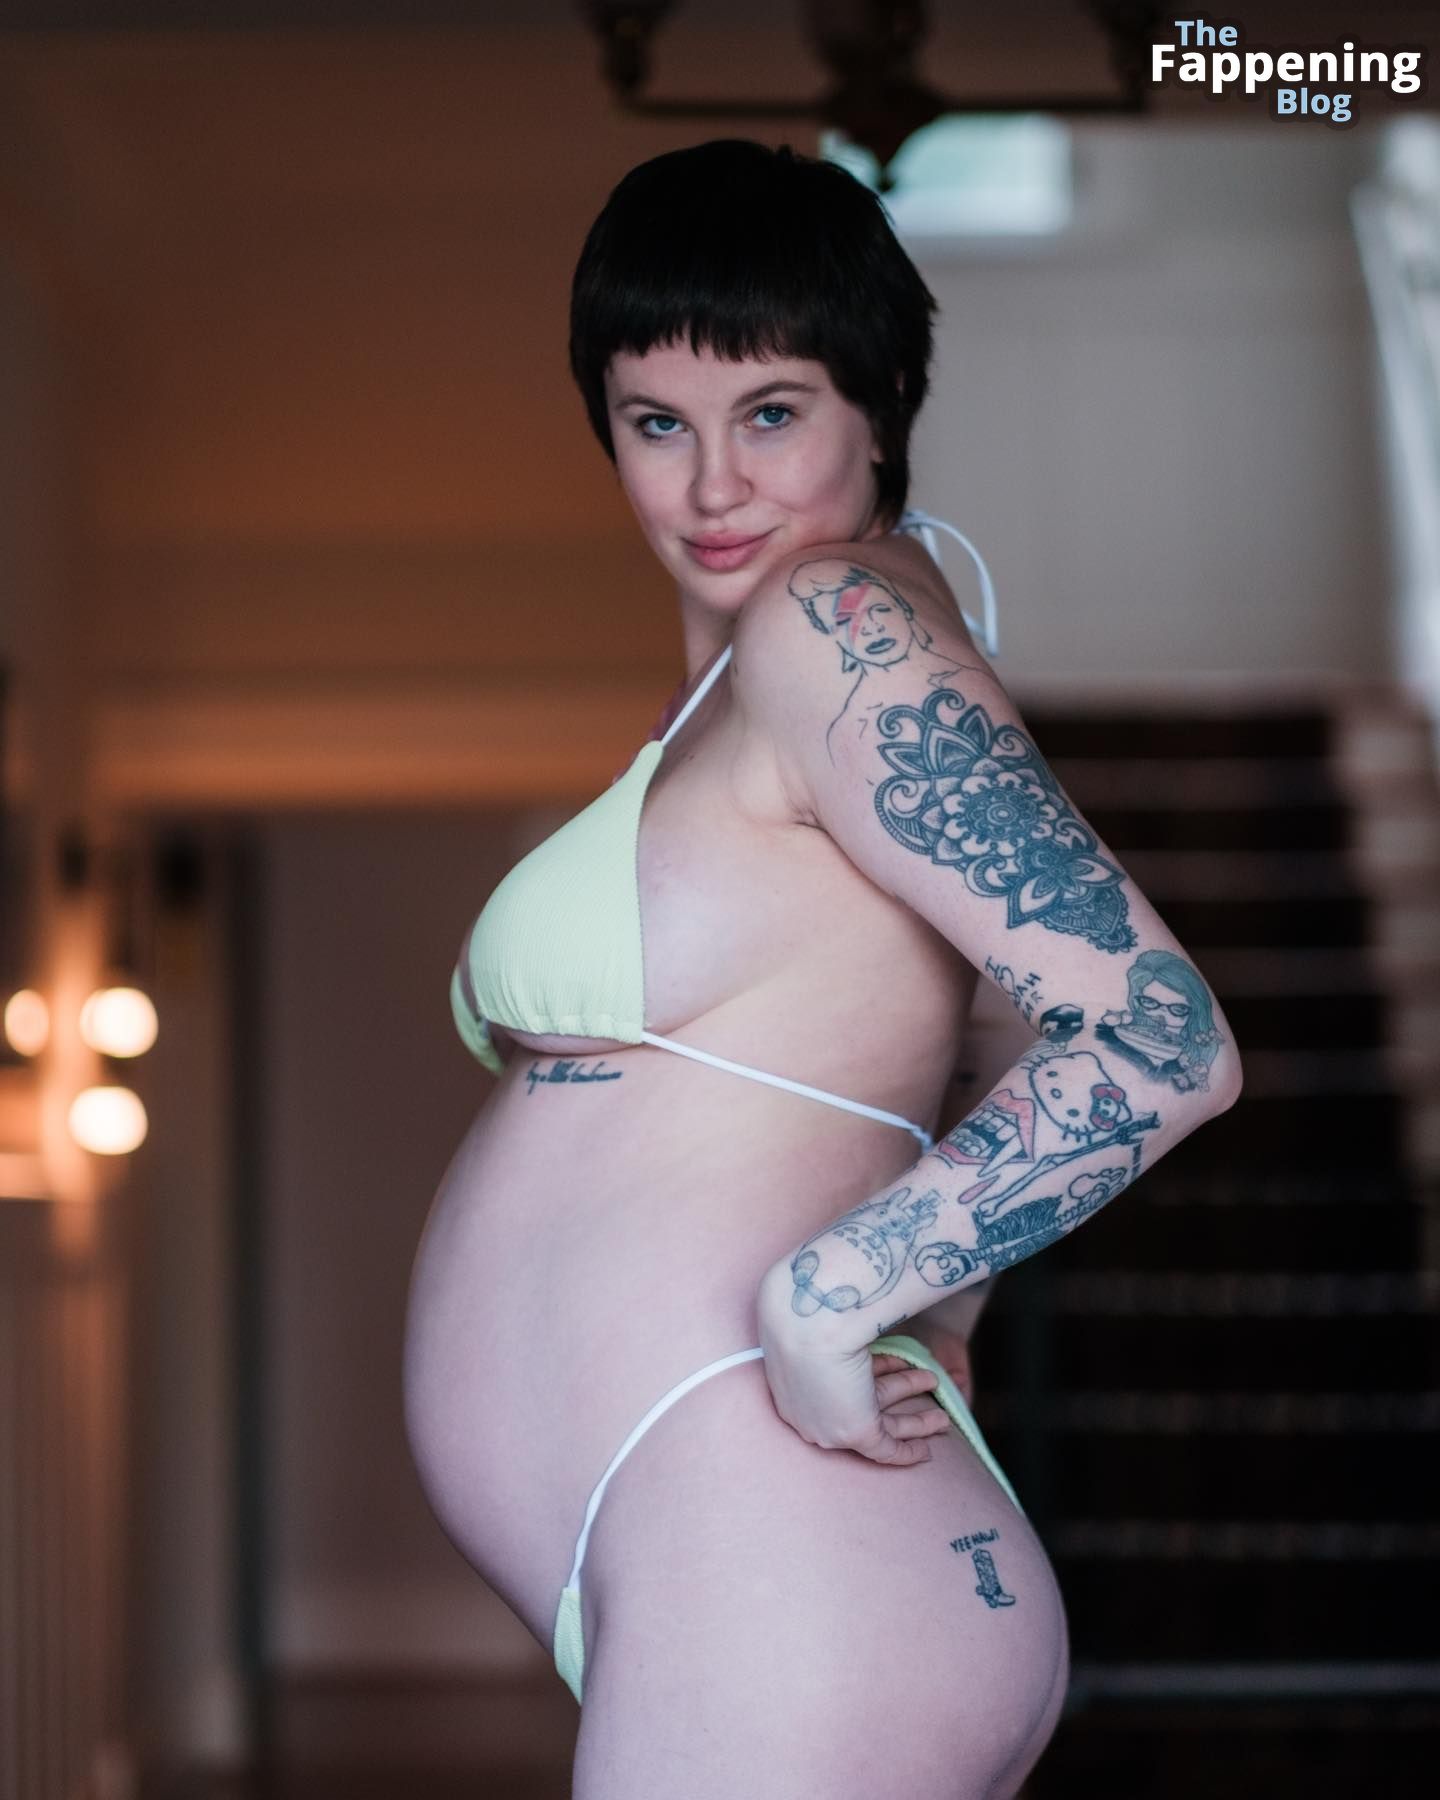 Ireland Baldwin Looks Hot in Bikinis During Her Pregnancy (7 Photos)